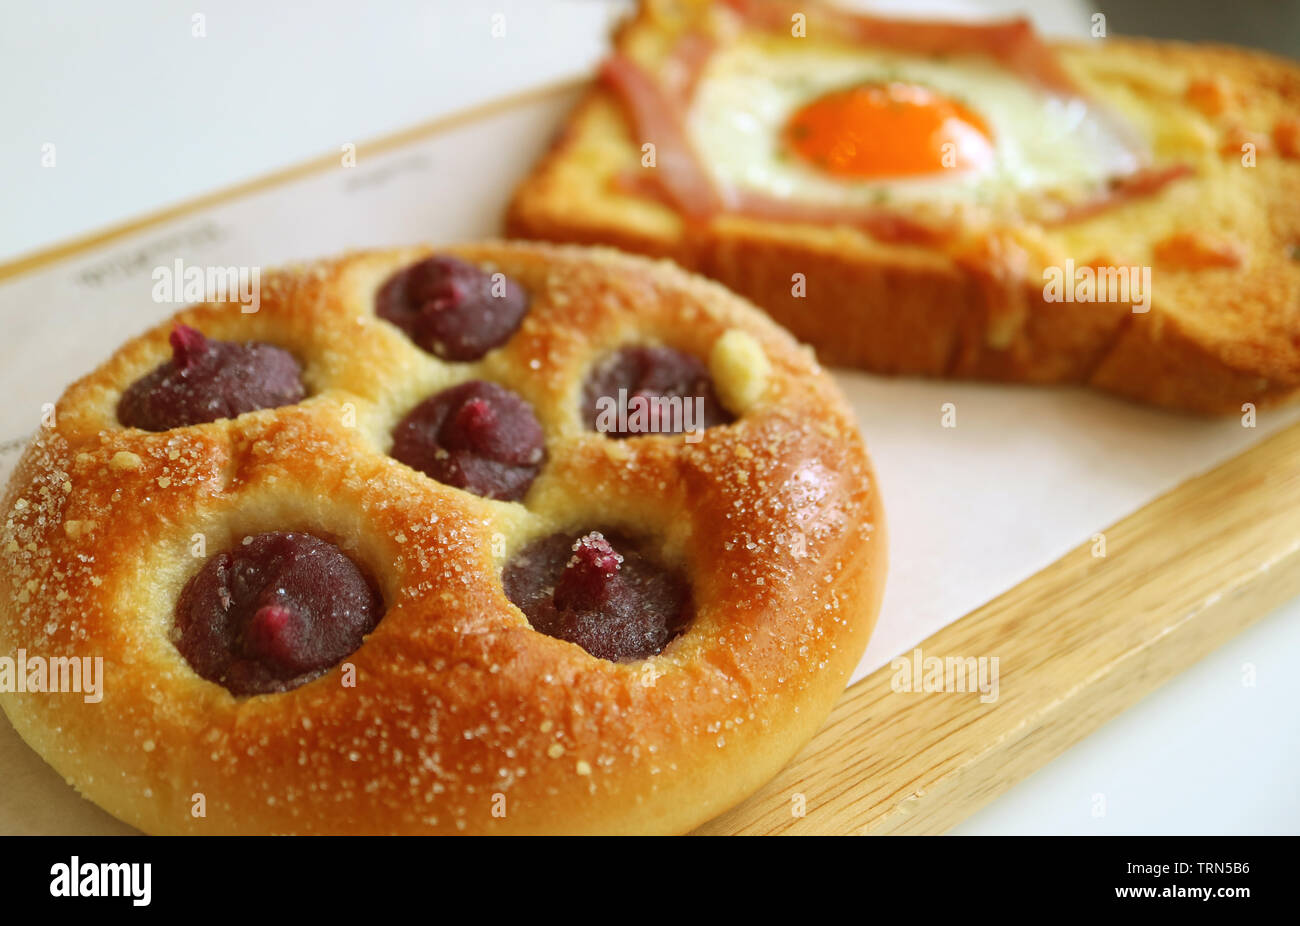 Closeup purple sweet potato cream bun with blurry egg and ham toast in background Stock Photo